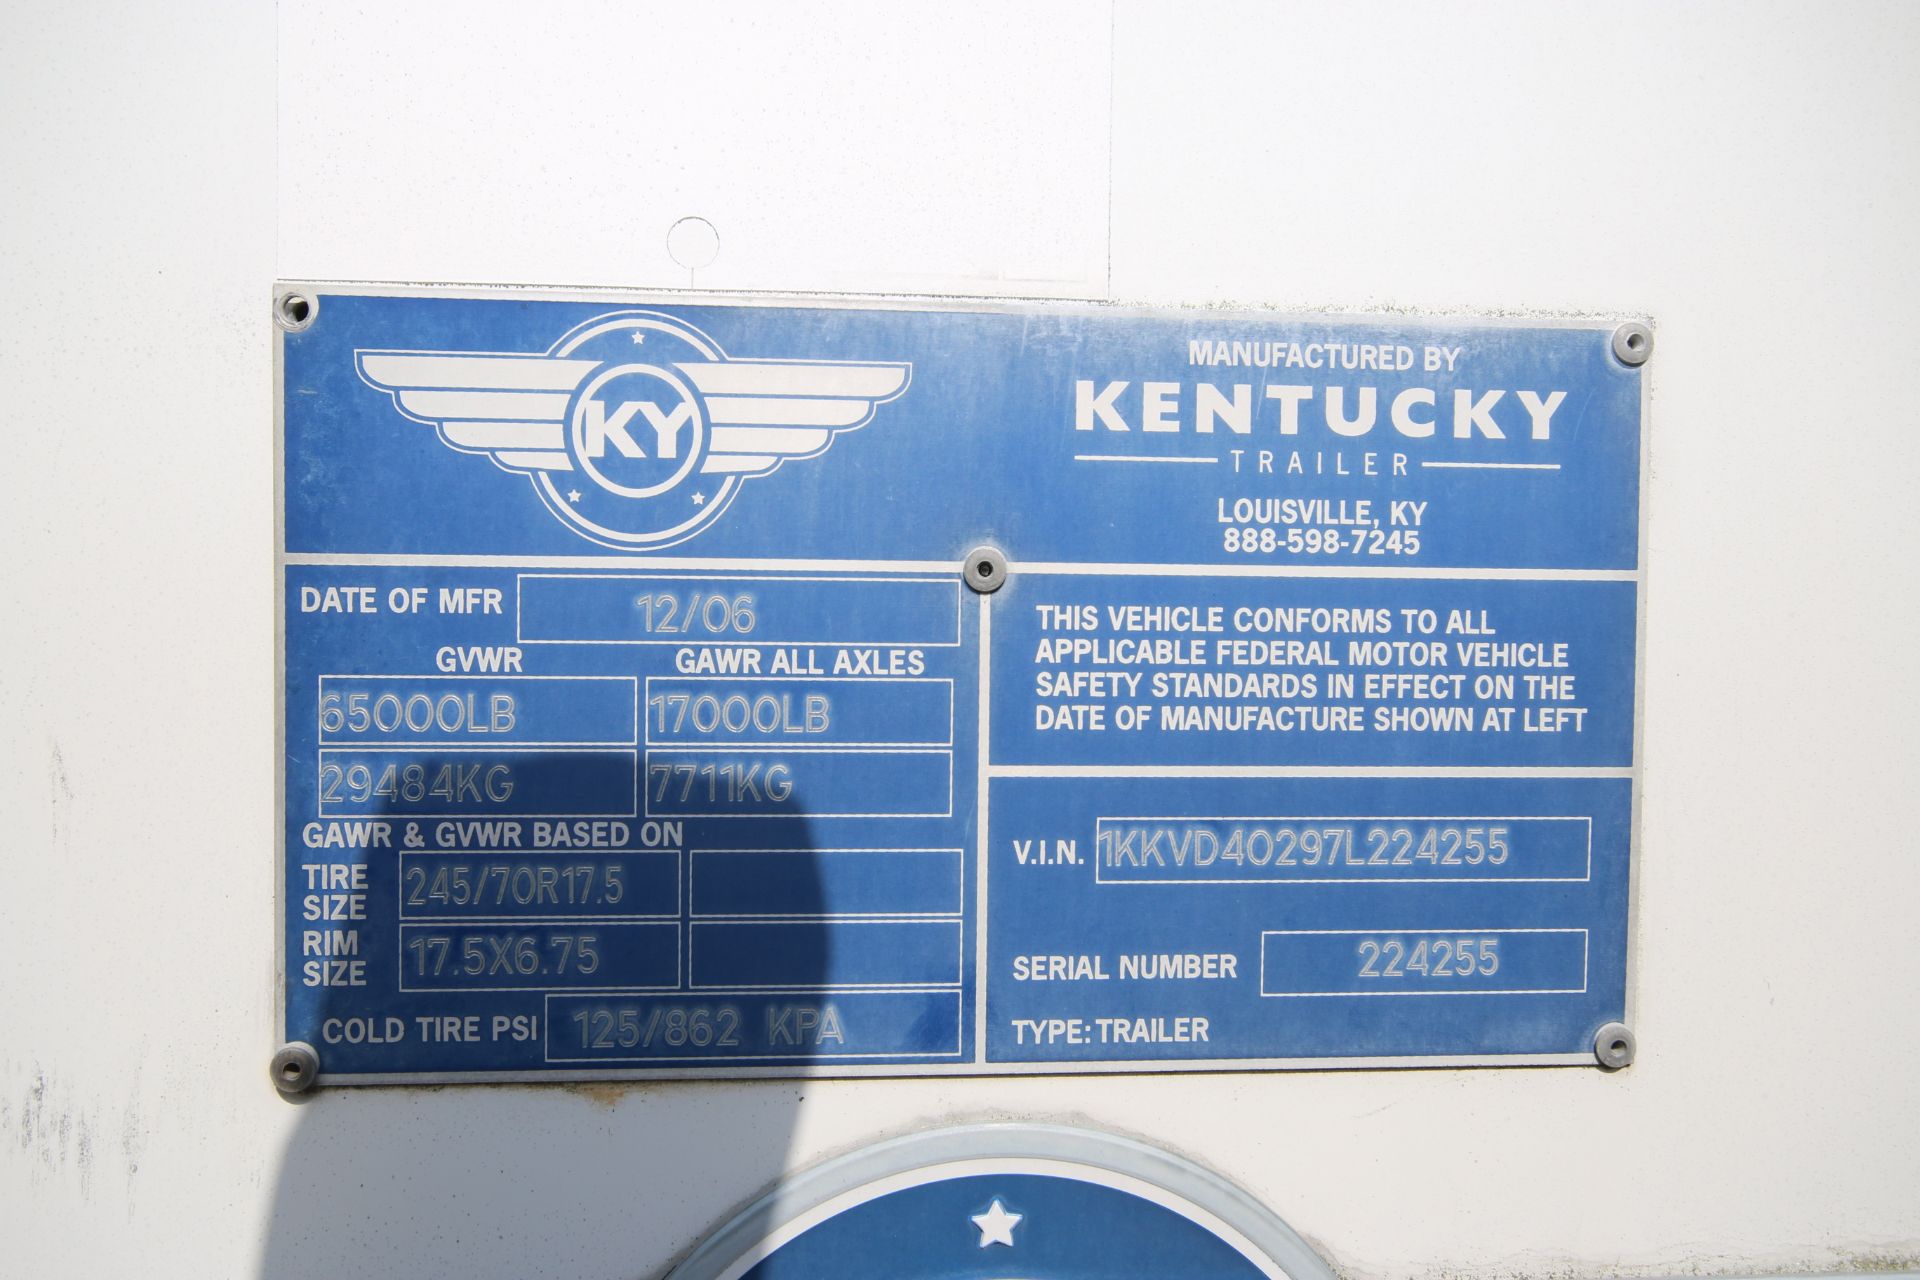 2006 Kentucky Enclosed Step Deck Trailer, VIN #: 1KKVD40297L224255, S/N 224255, GVWR 65,000 lbs./ - Image 5 of 8